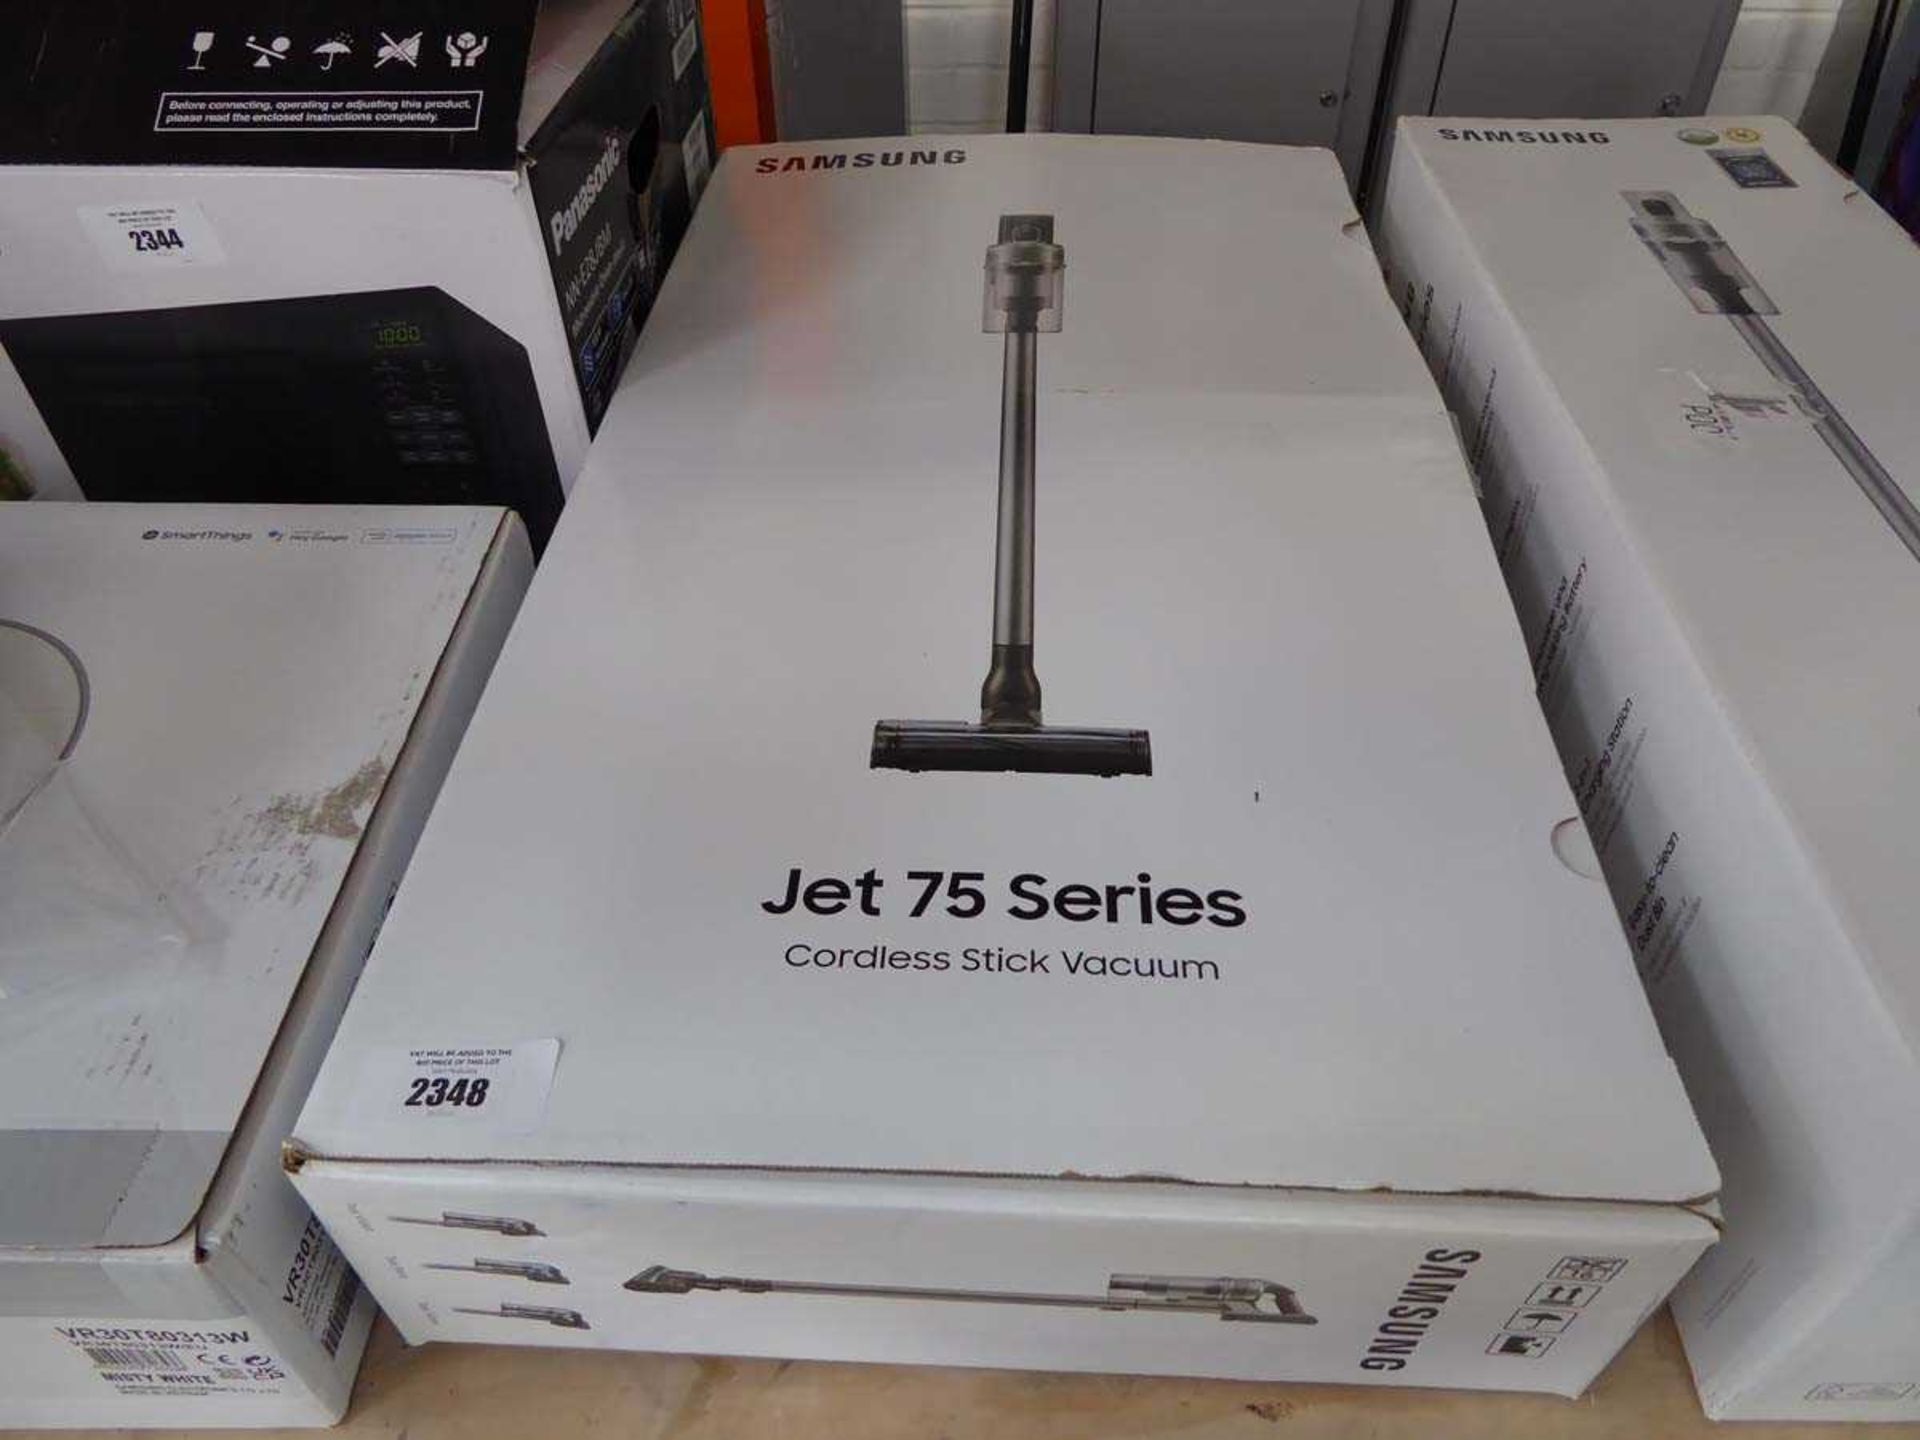 +VAT Boxed Samsung Jet 75 cordless stick vacuum cleaner